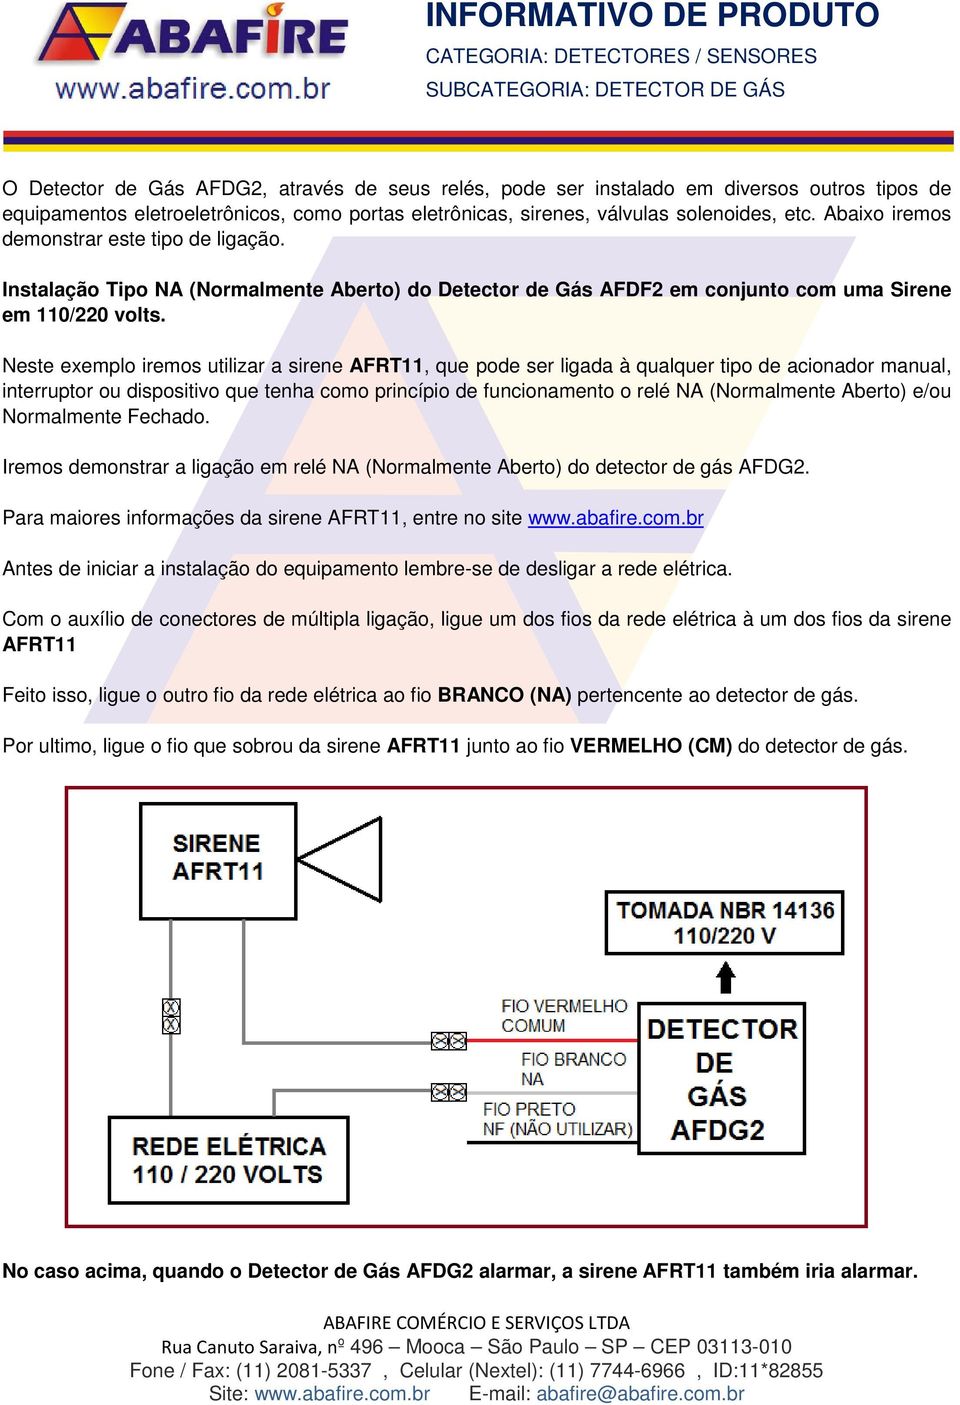 Neste exemplo iremos utilizar a sirene AFRT11, que pode ser ligada à qualquer tipo de acionador manual, interruptor ou dispositivo que tenha como princípio de funcionamento o relé NA (Normalmente